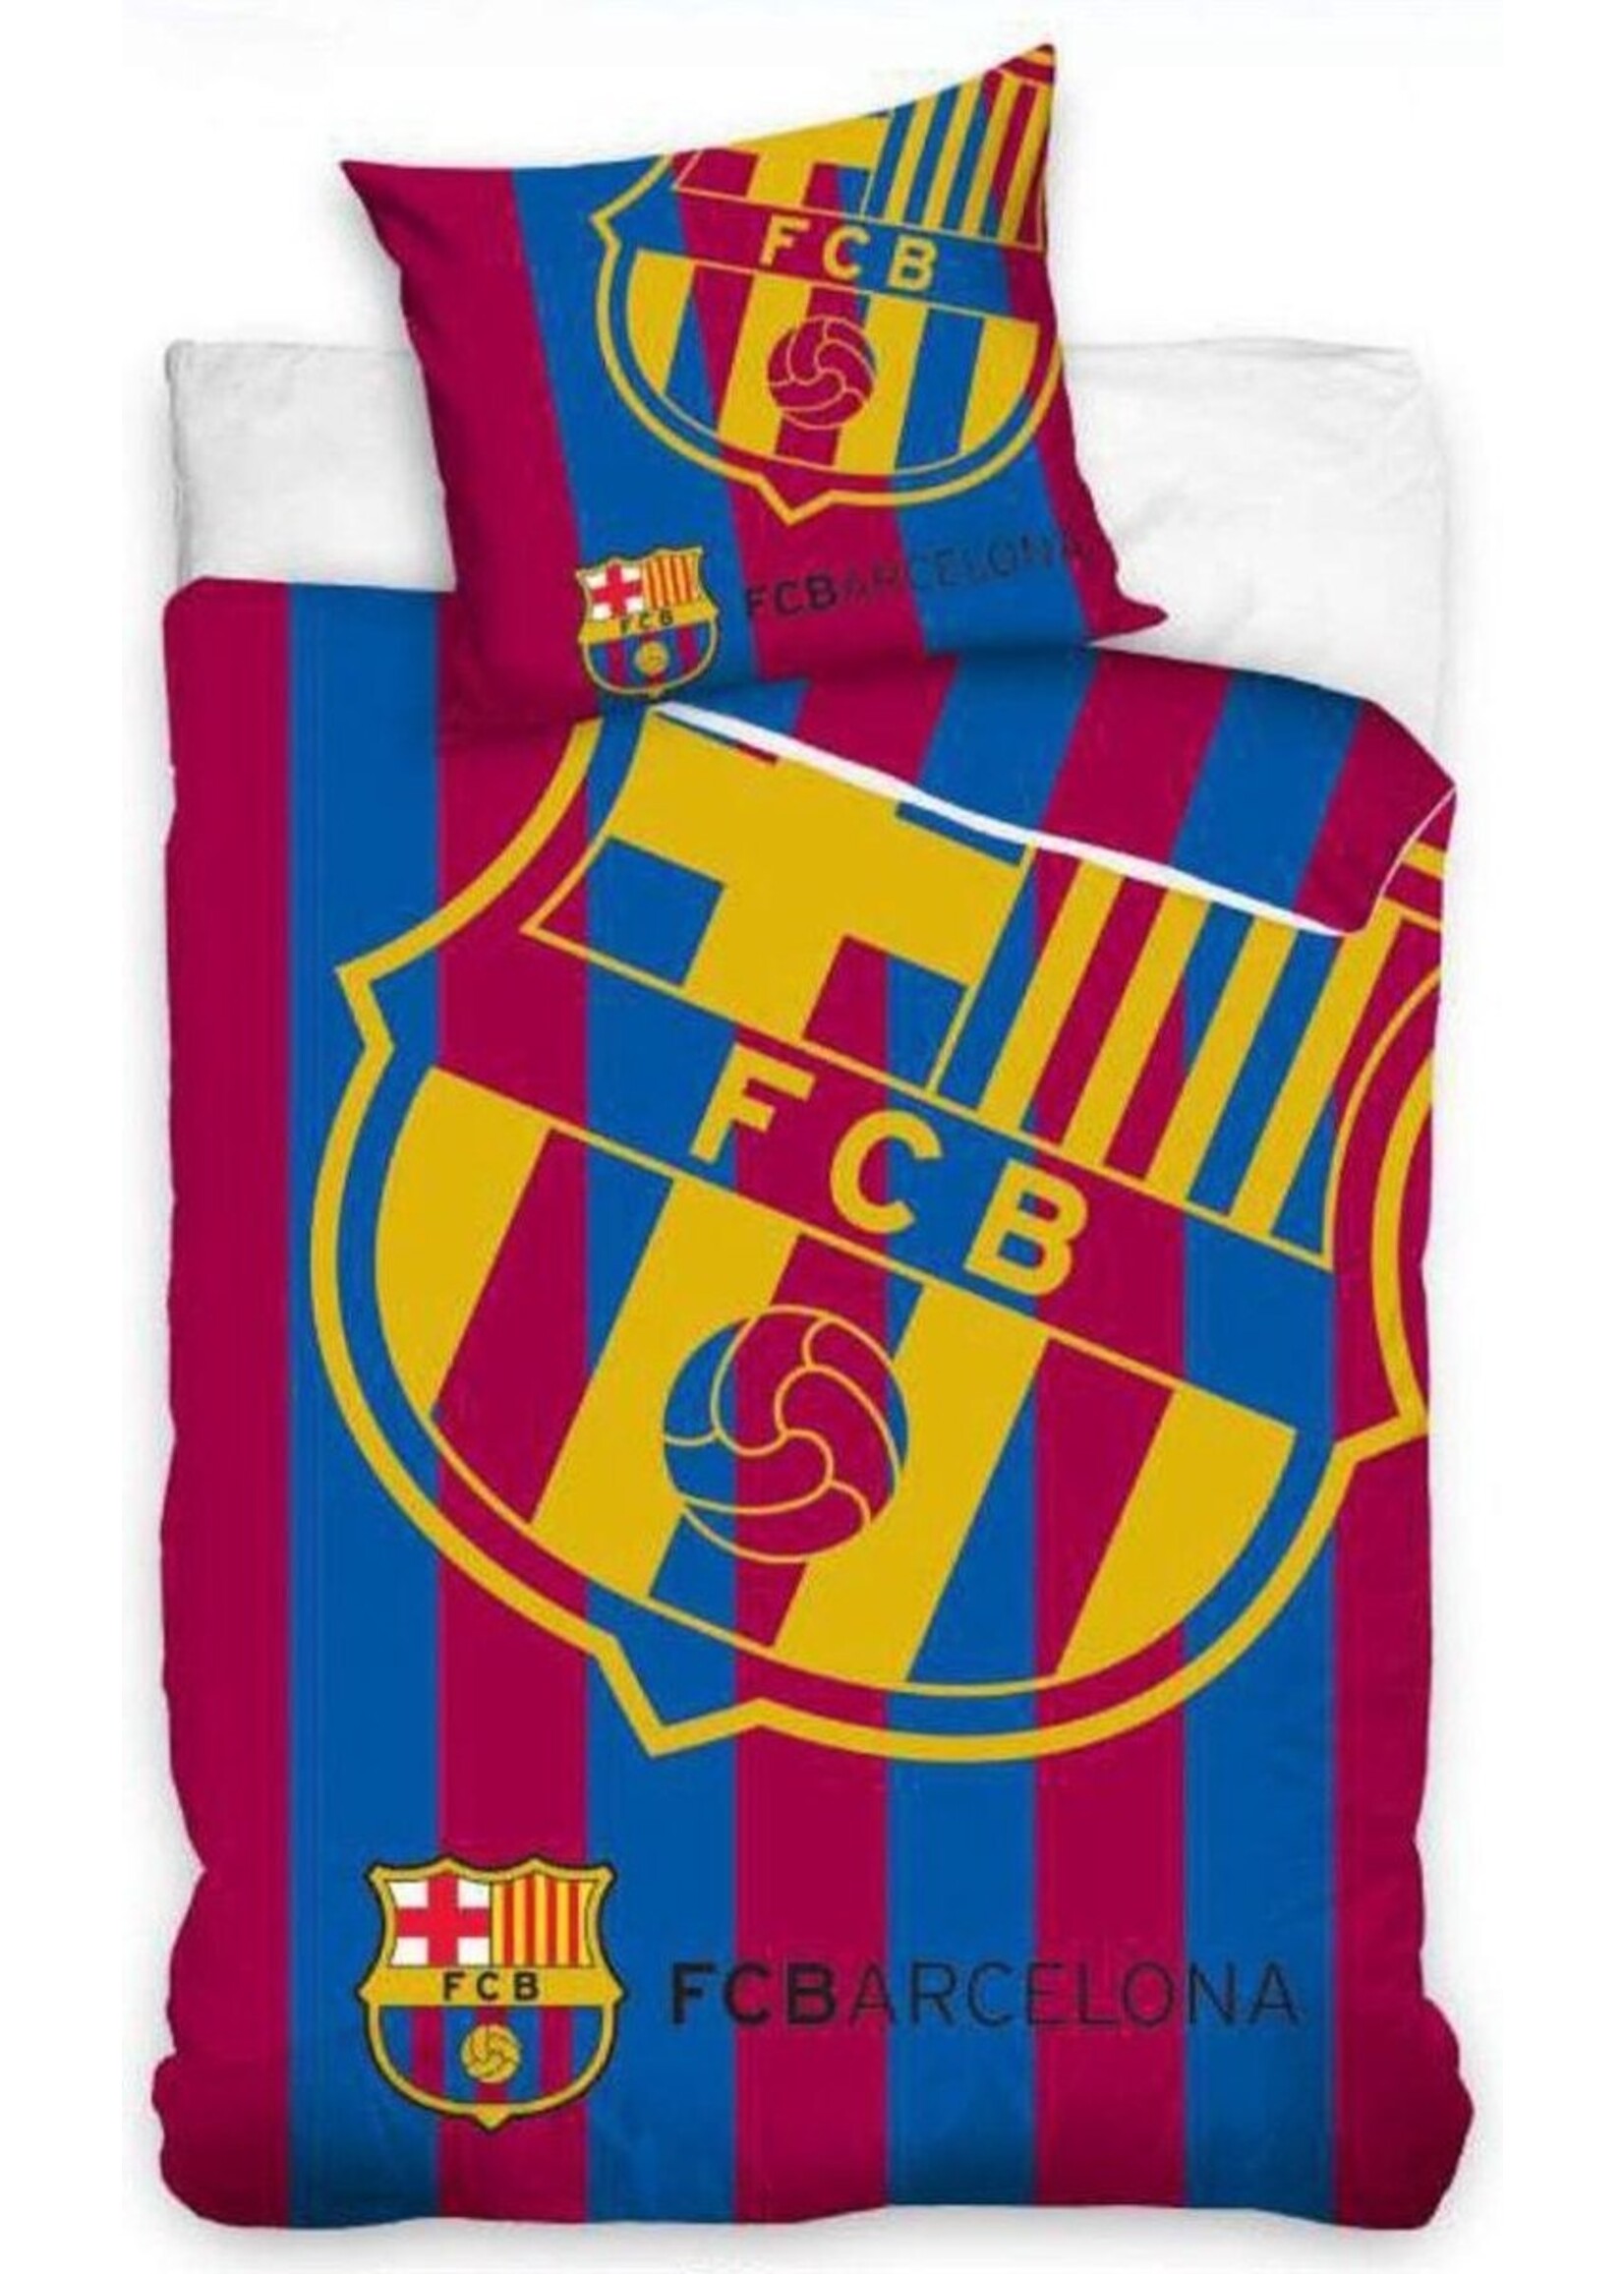 Single Duvet FCB Barcelona 140 X 200 Cm Cotton Pillowcase 65x65cm